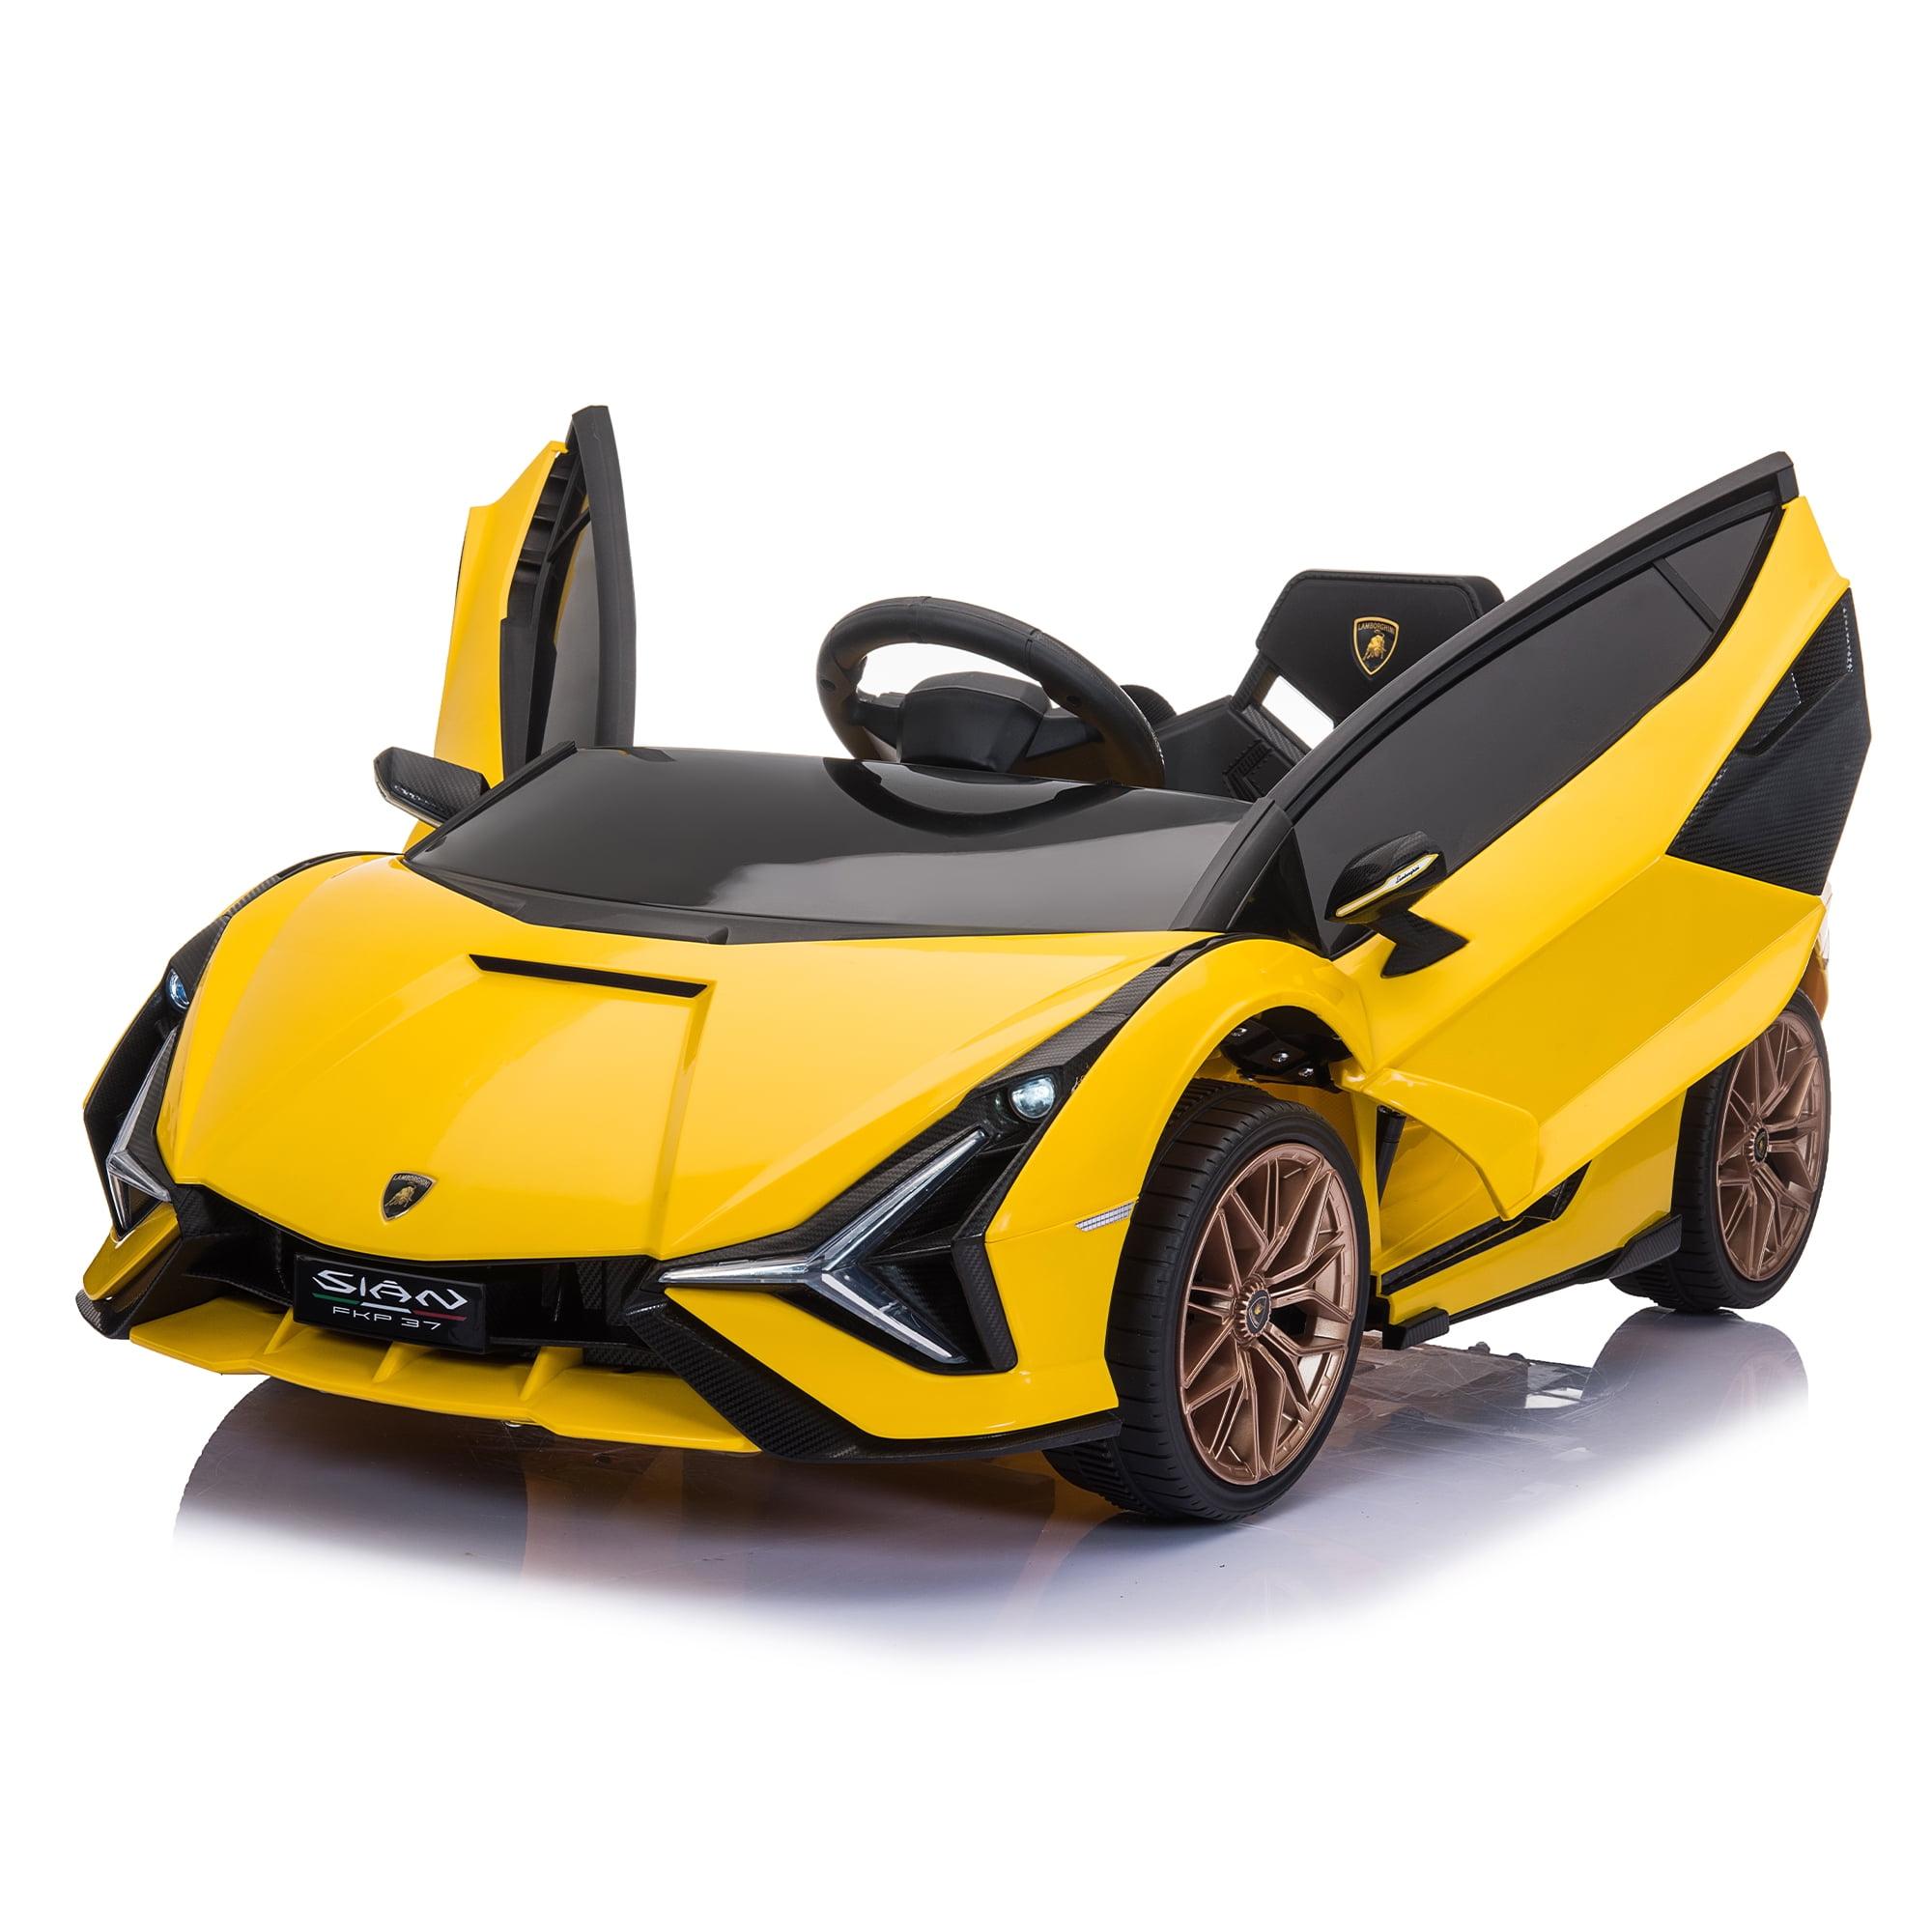 Lamborghini Sian Toy Car Remote Control: Exhilarating Speed and Control with Lamborghini Sian Toy Car